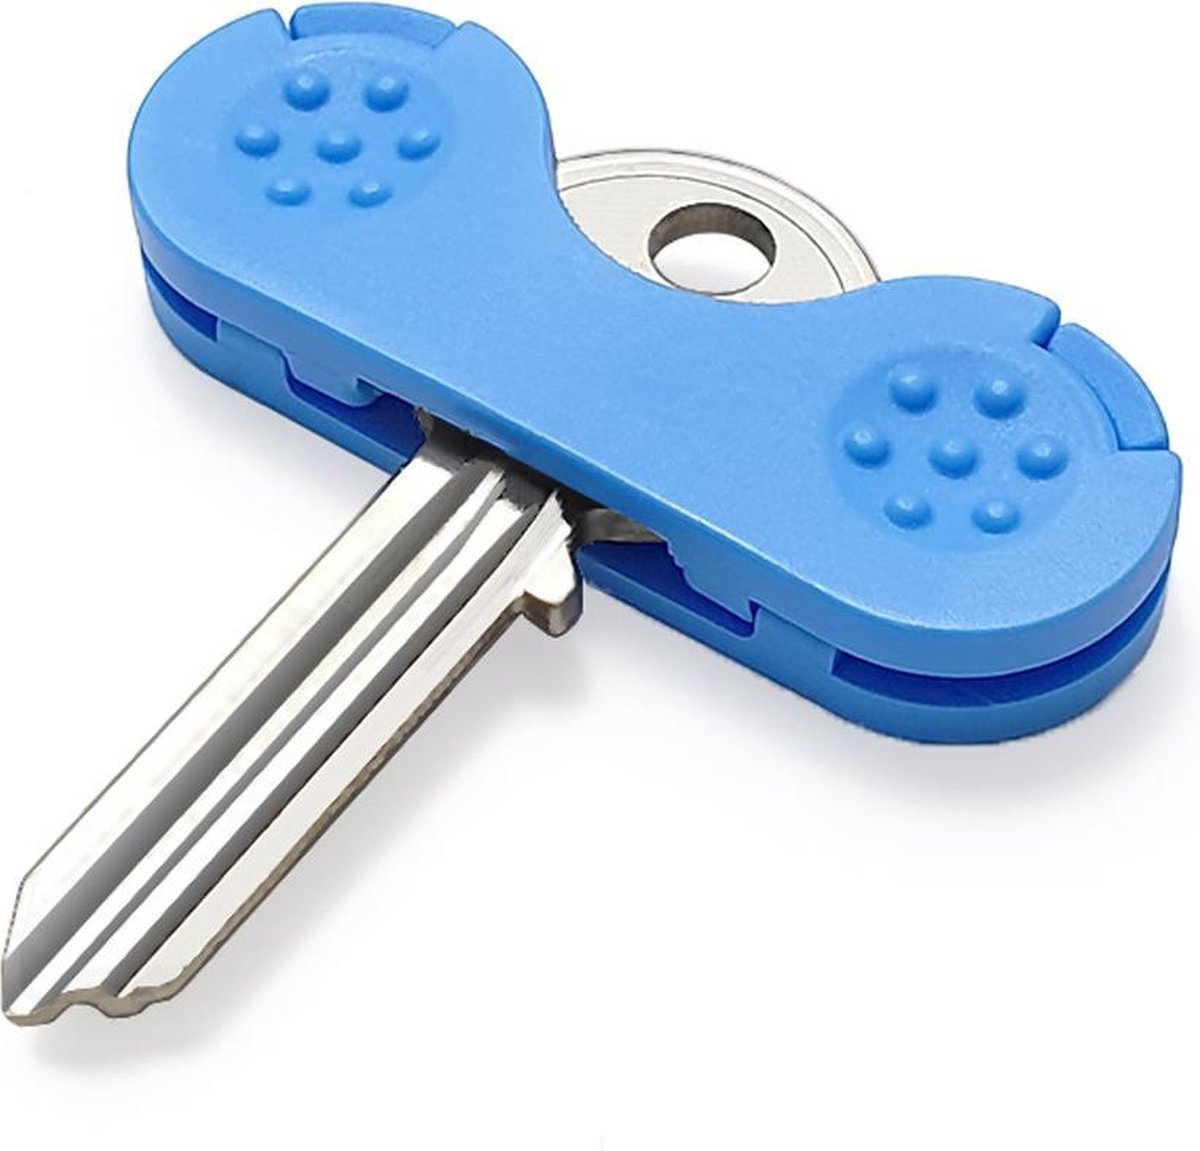 Keywing sleutelhulp - blauw - hulpmiddel voor artritis - betere grip - meer kracht